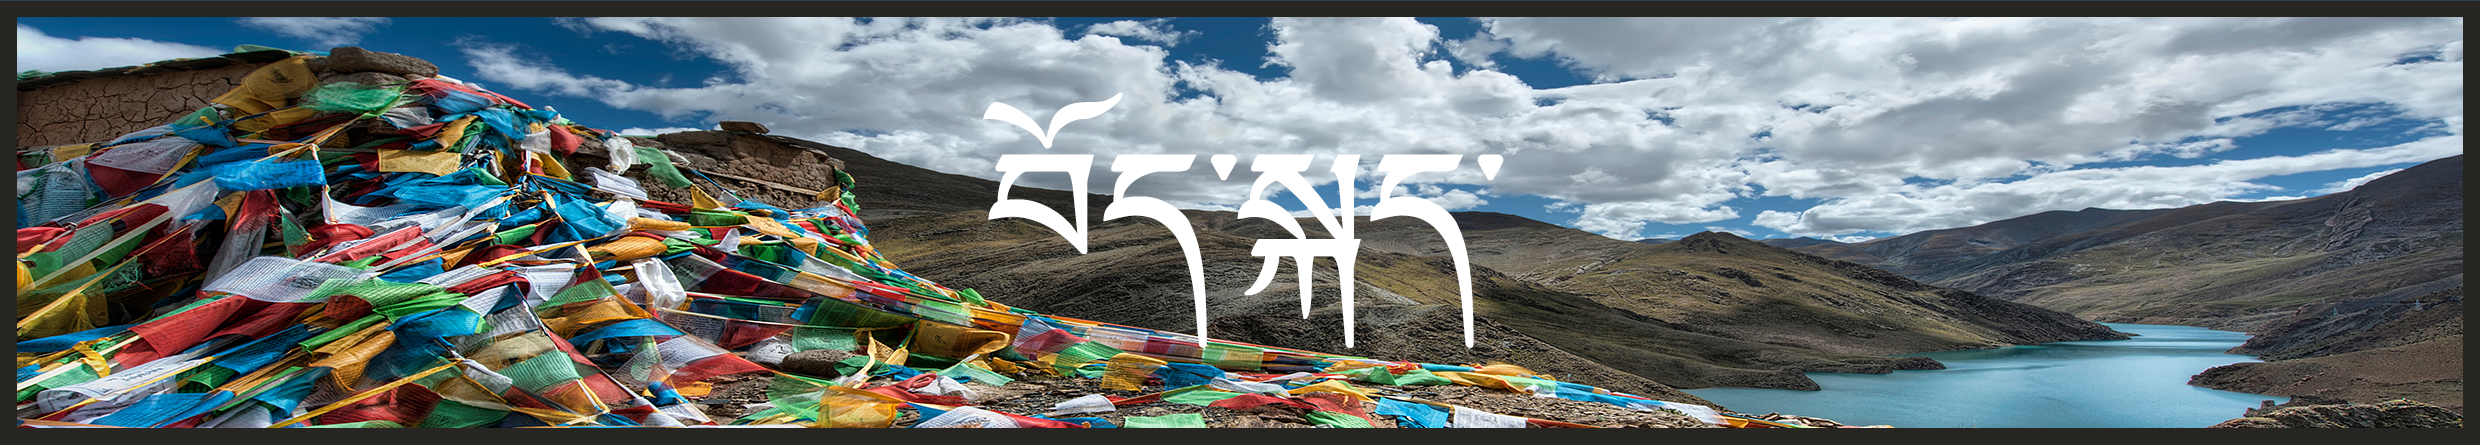 tibetan banner